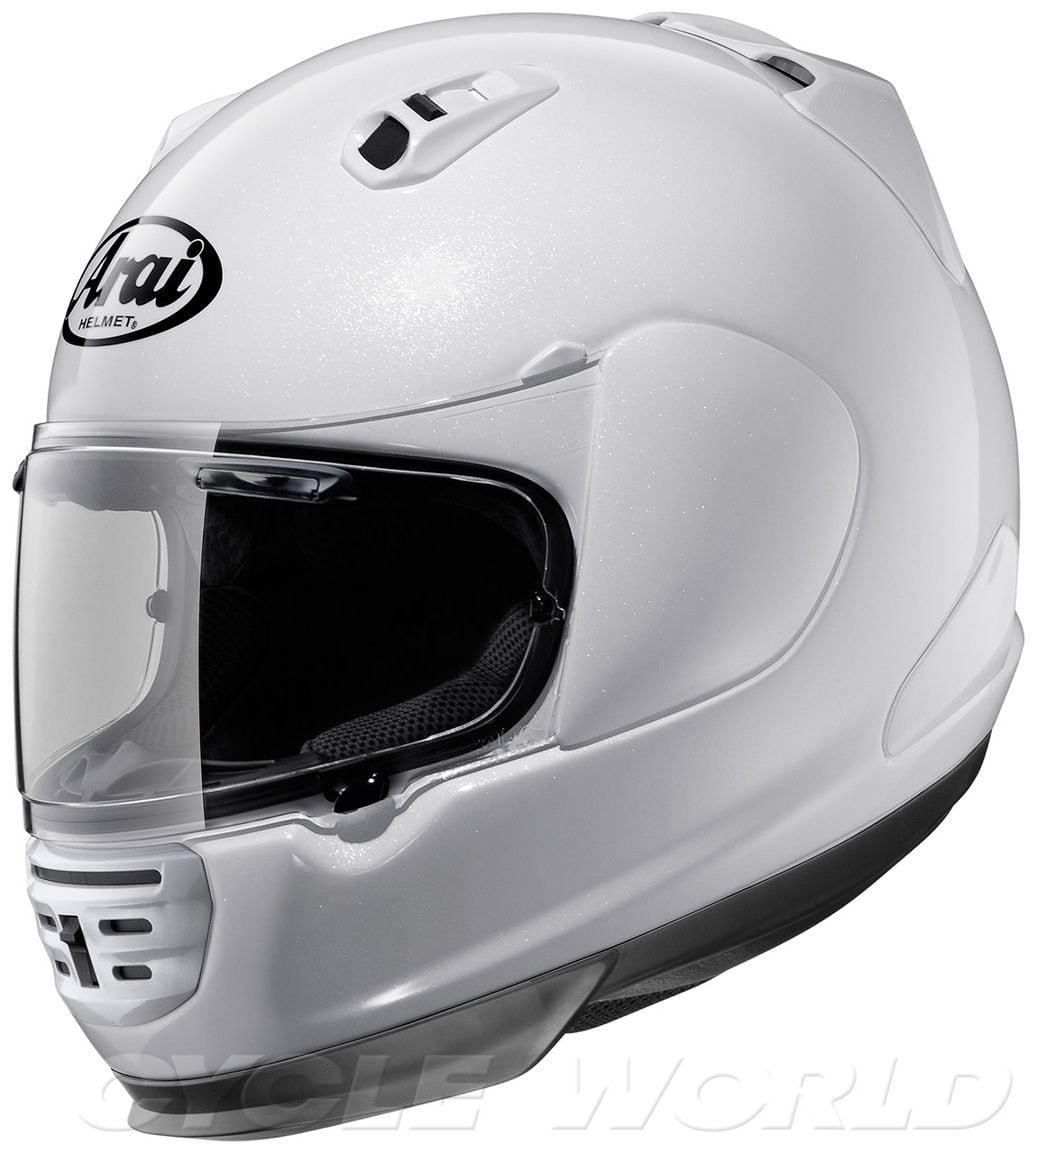 Arai Defiant Helmet- First Look Review | Cycle World